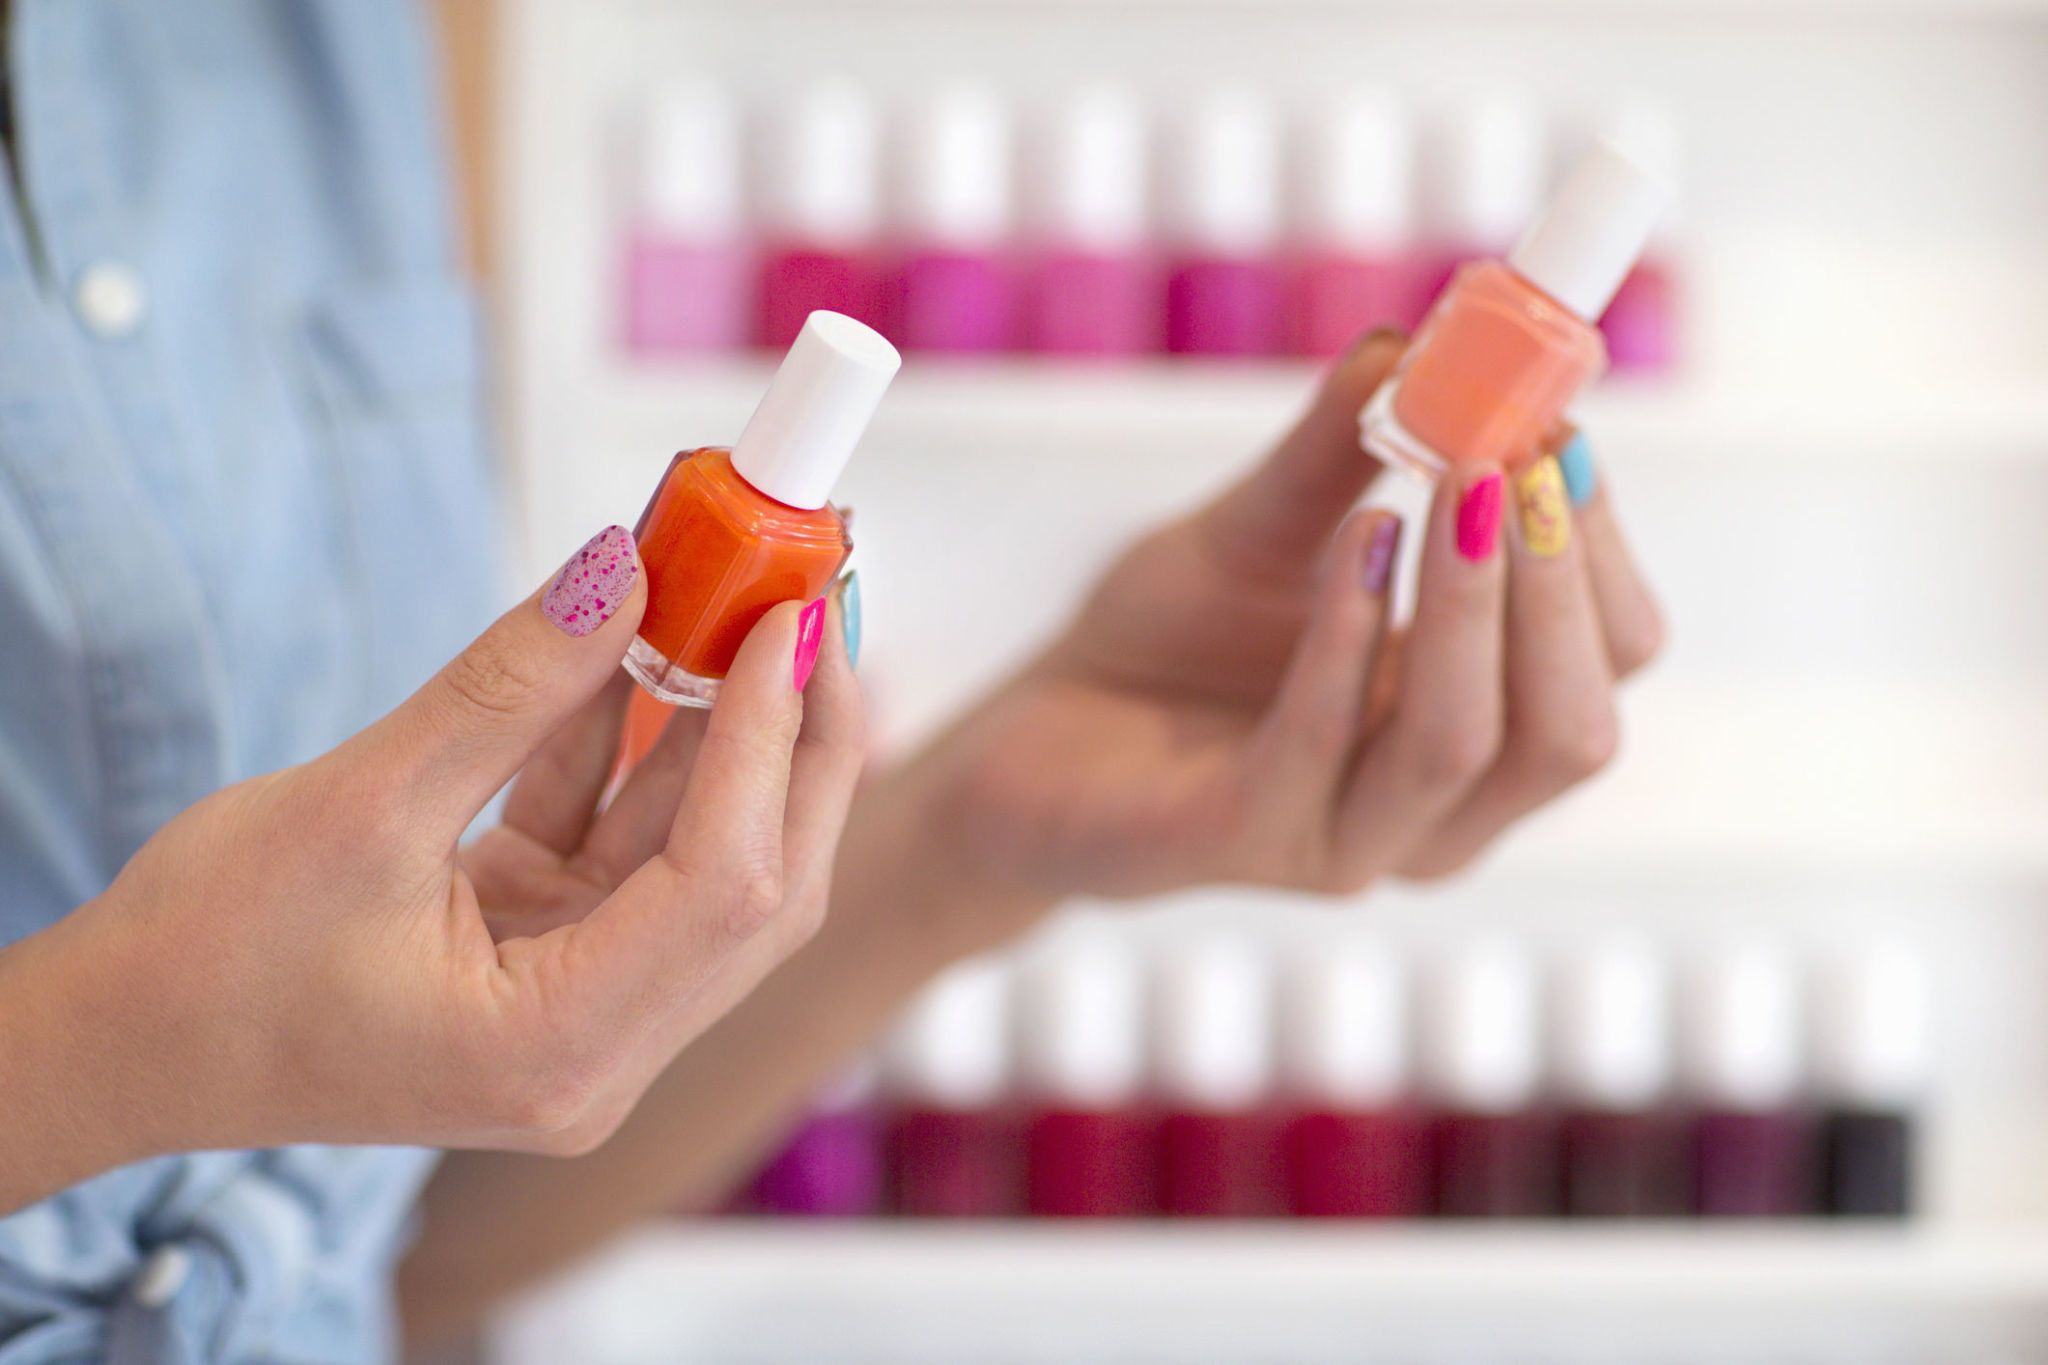 Is nail polish bad for nails? - Quora